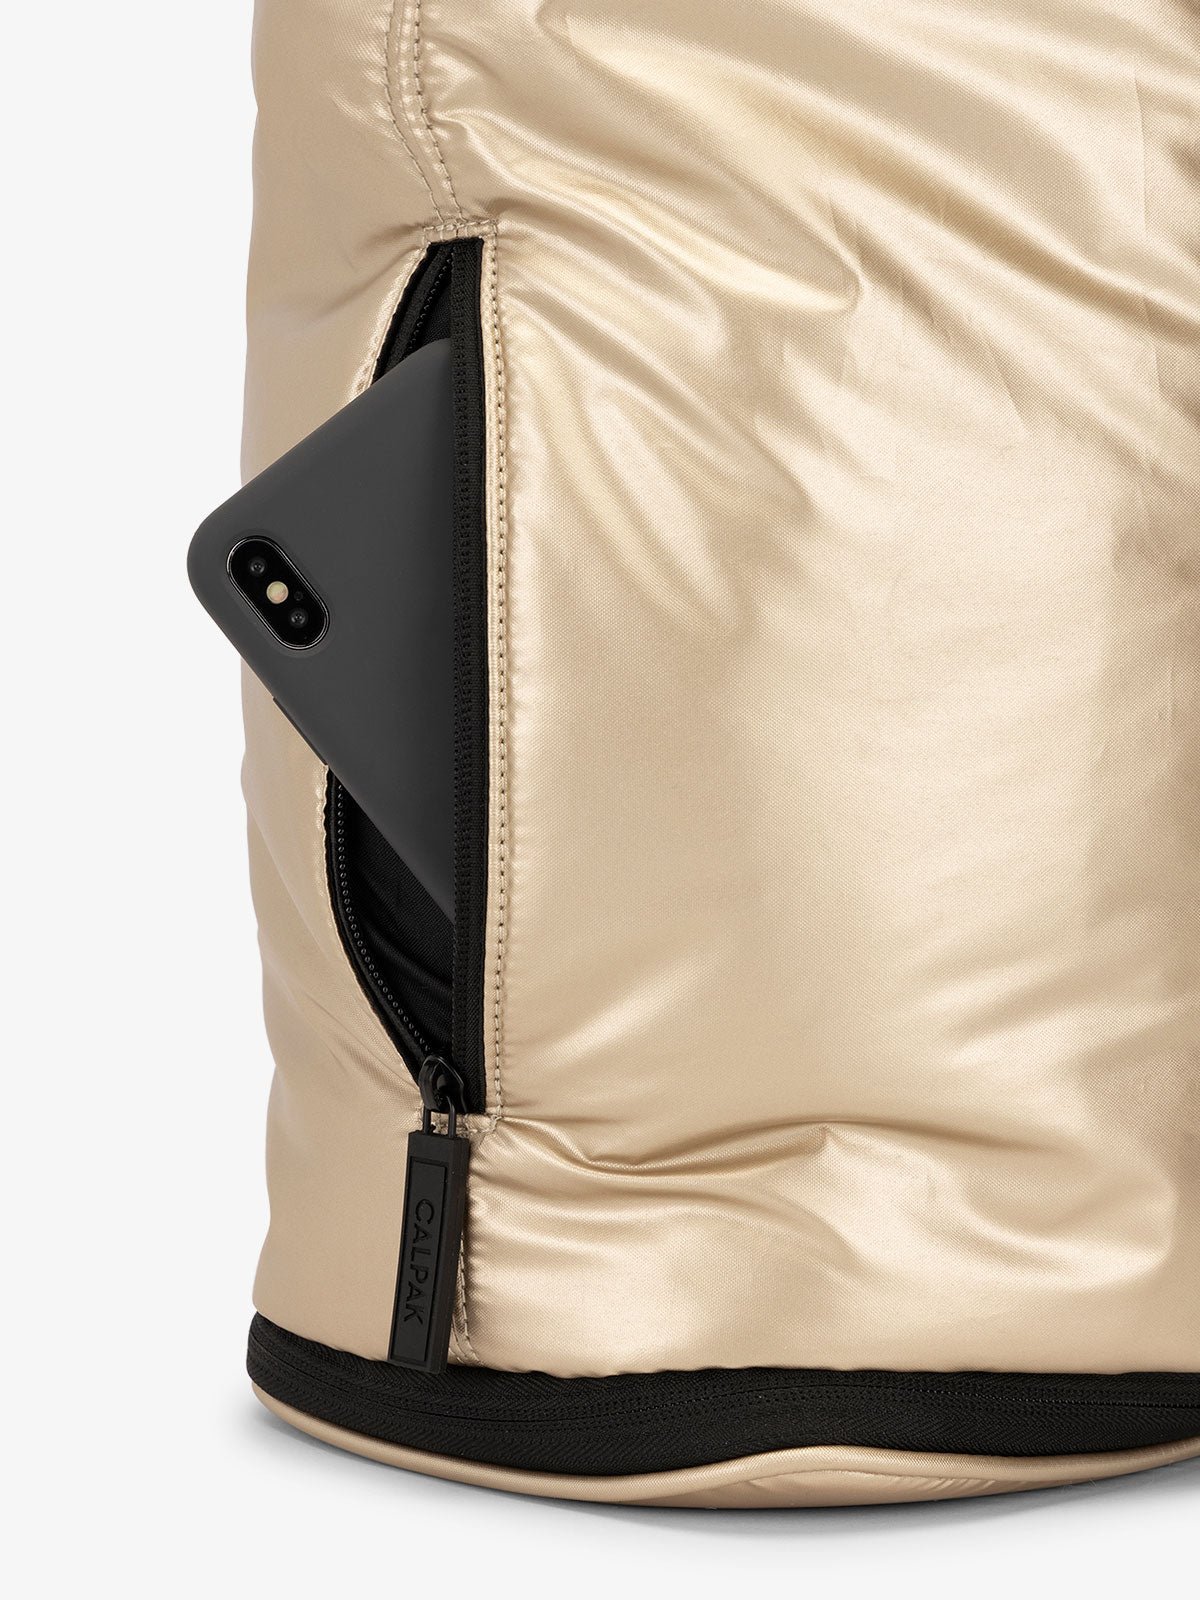 CALPAK Luka expandable laptop bag with hidden zippered pockets in metallic gold